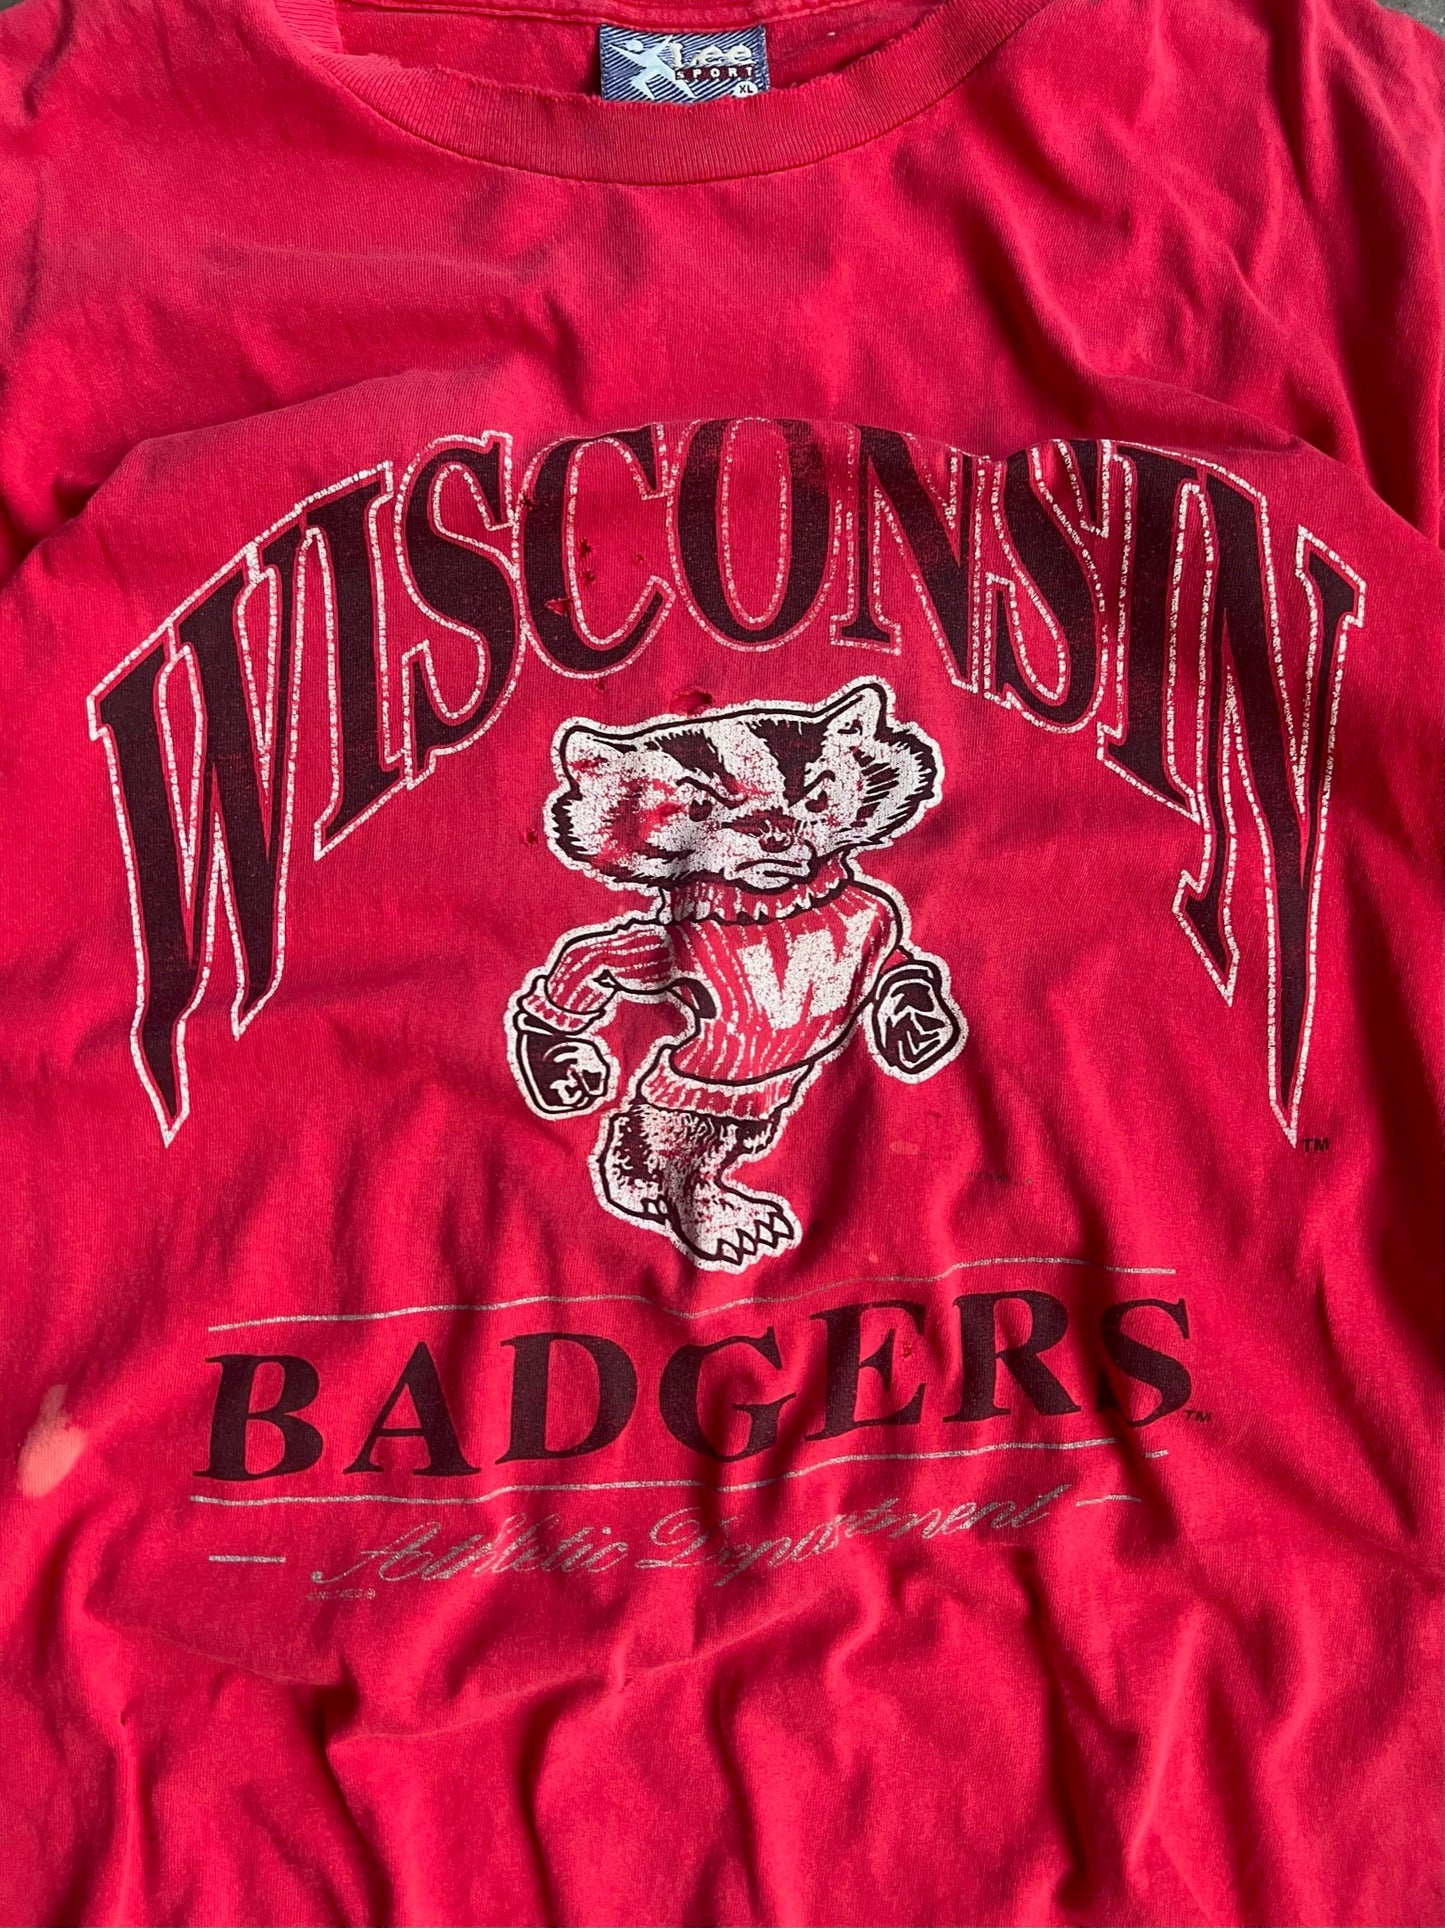 Vintage Wisconsin Badgers Shirt - XL